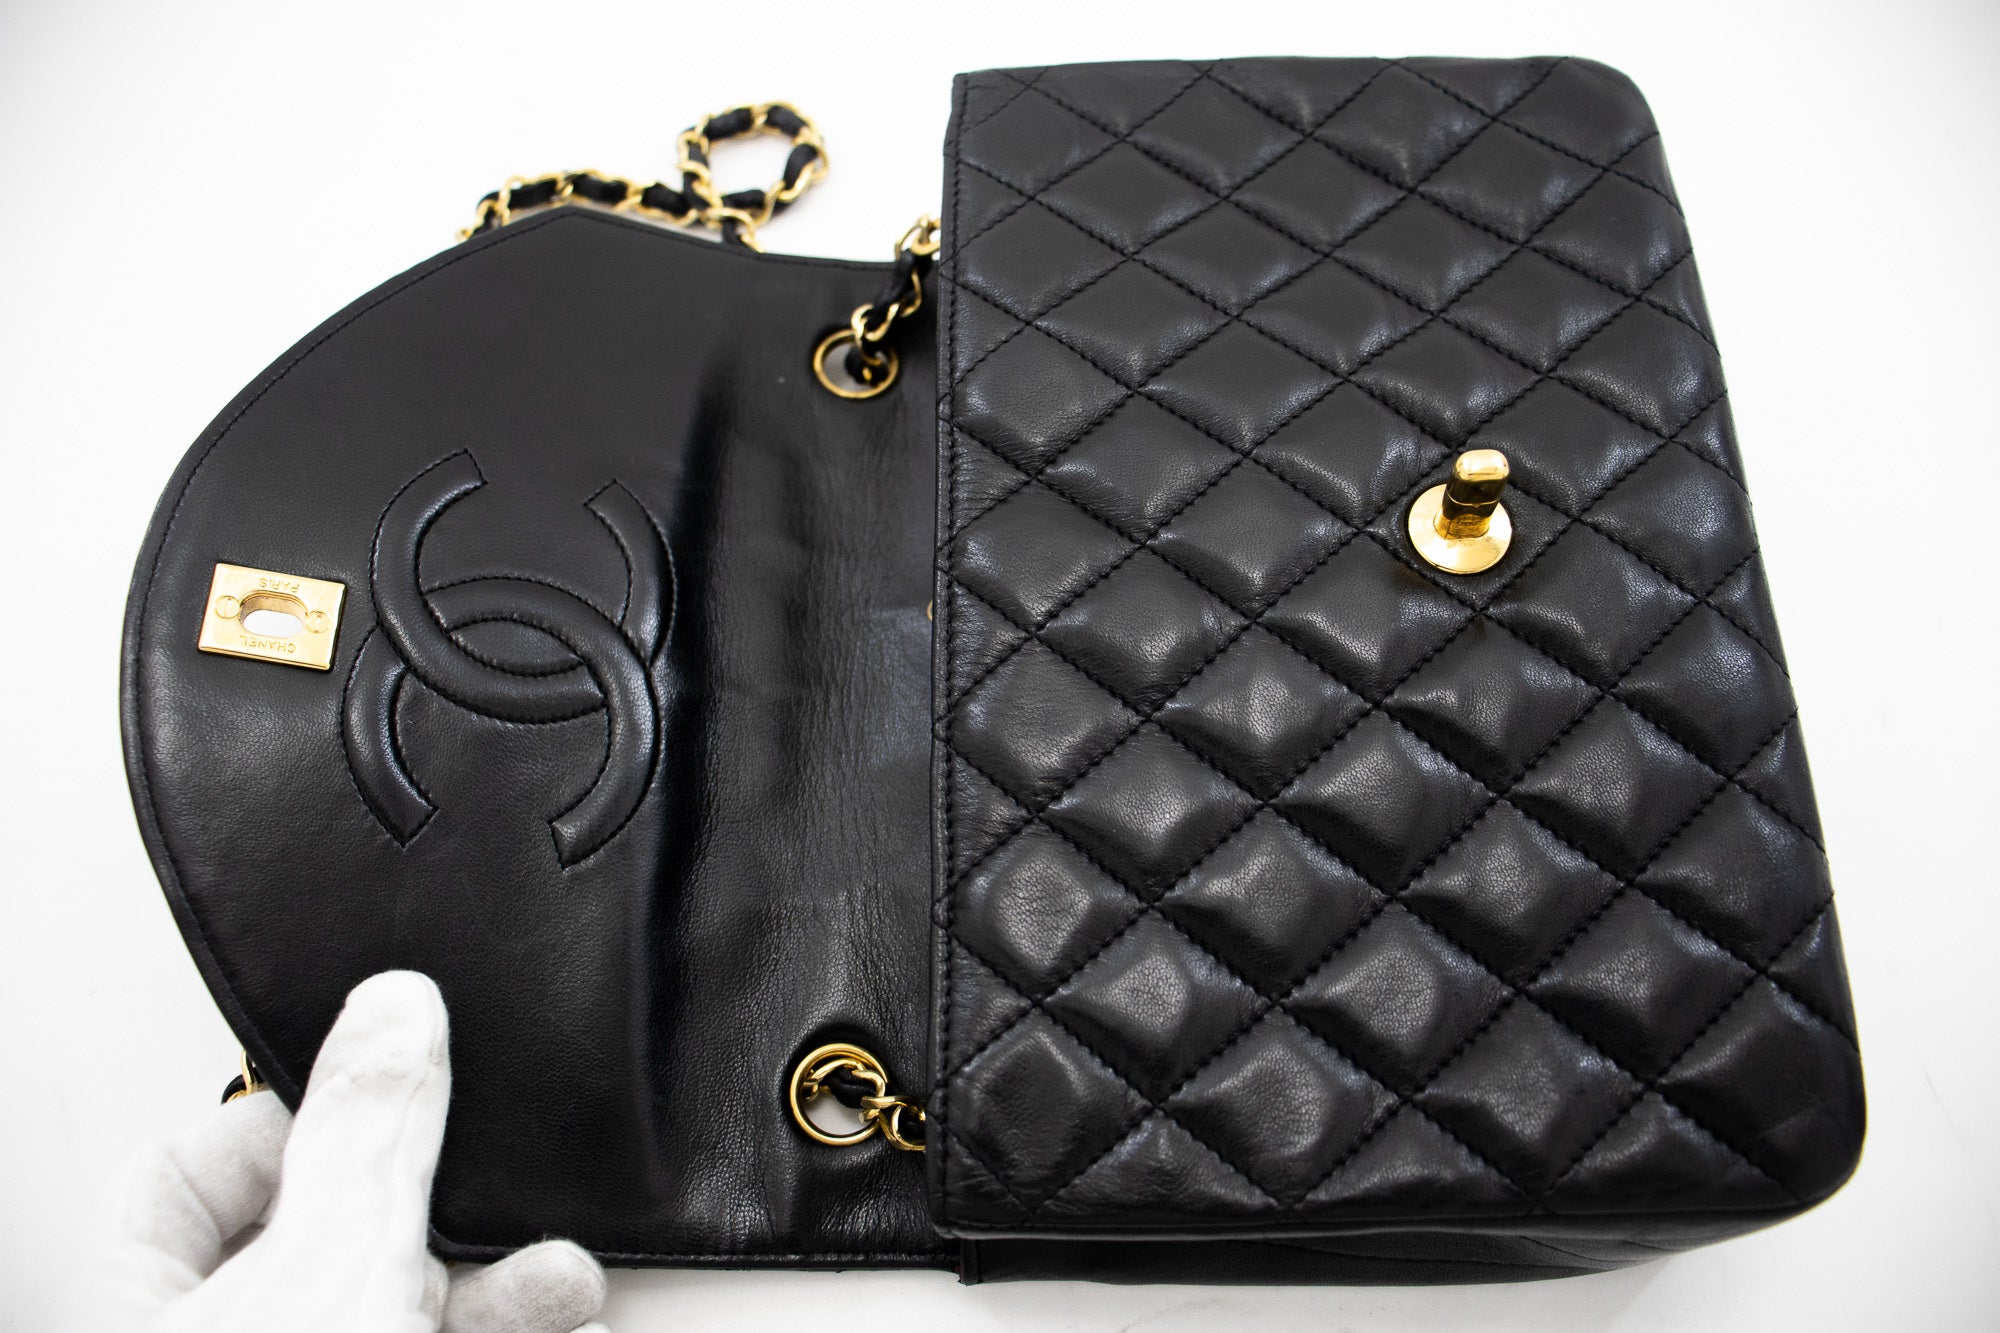 Chanel Half Moon Chain Shoulder Bag Crossbody Black Quilted Flap J18